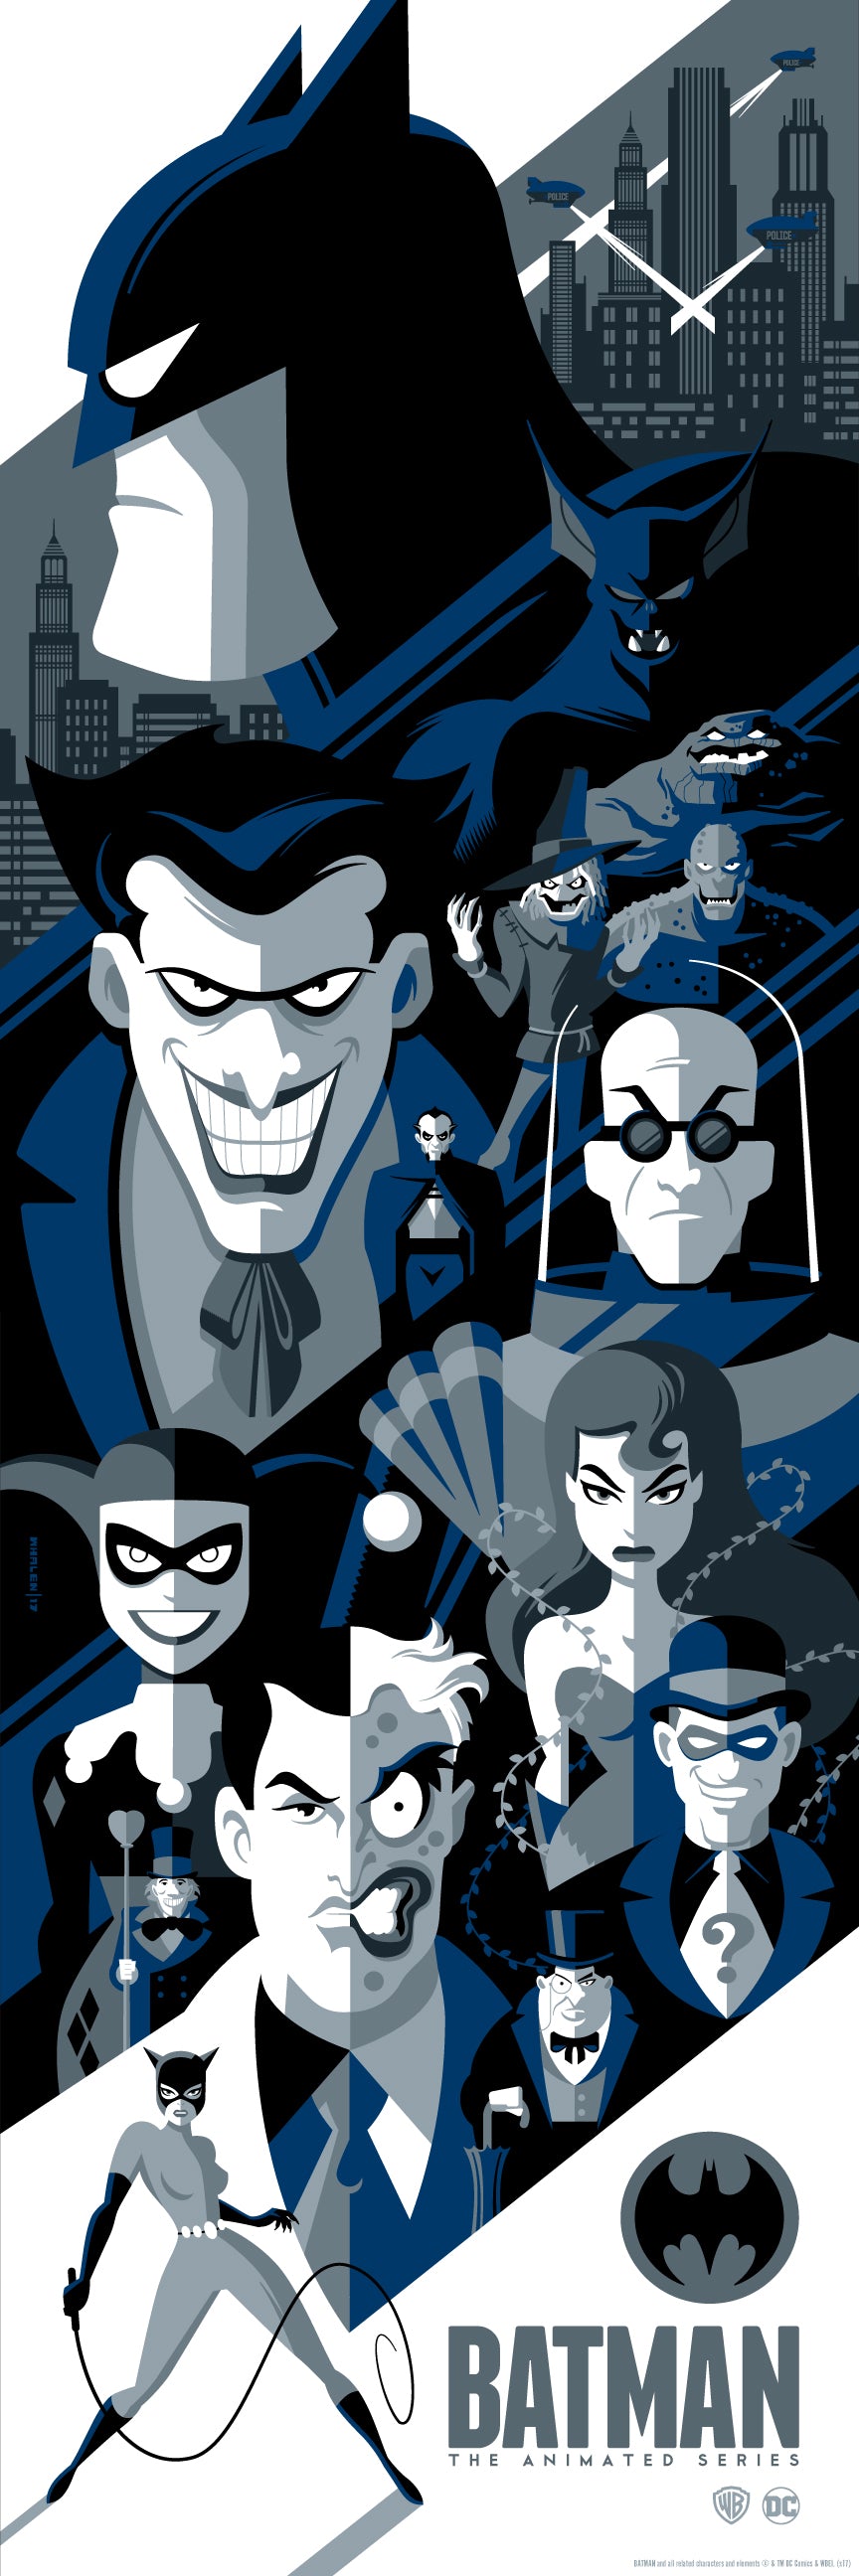 Tom Whalen "Batman: The Animated Series" Variant